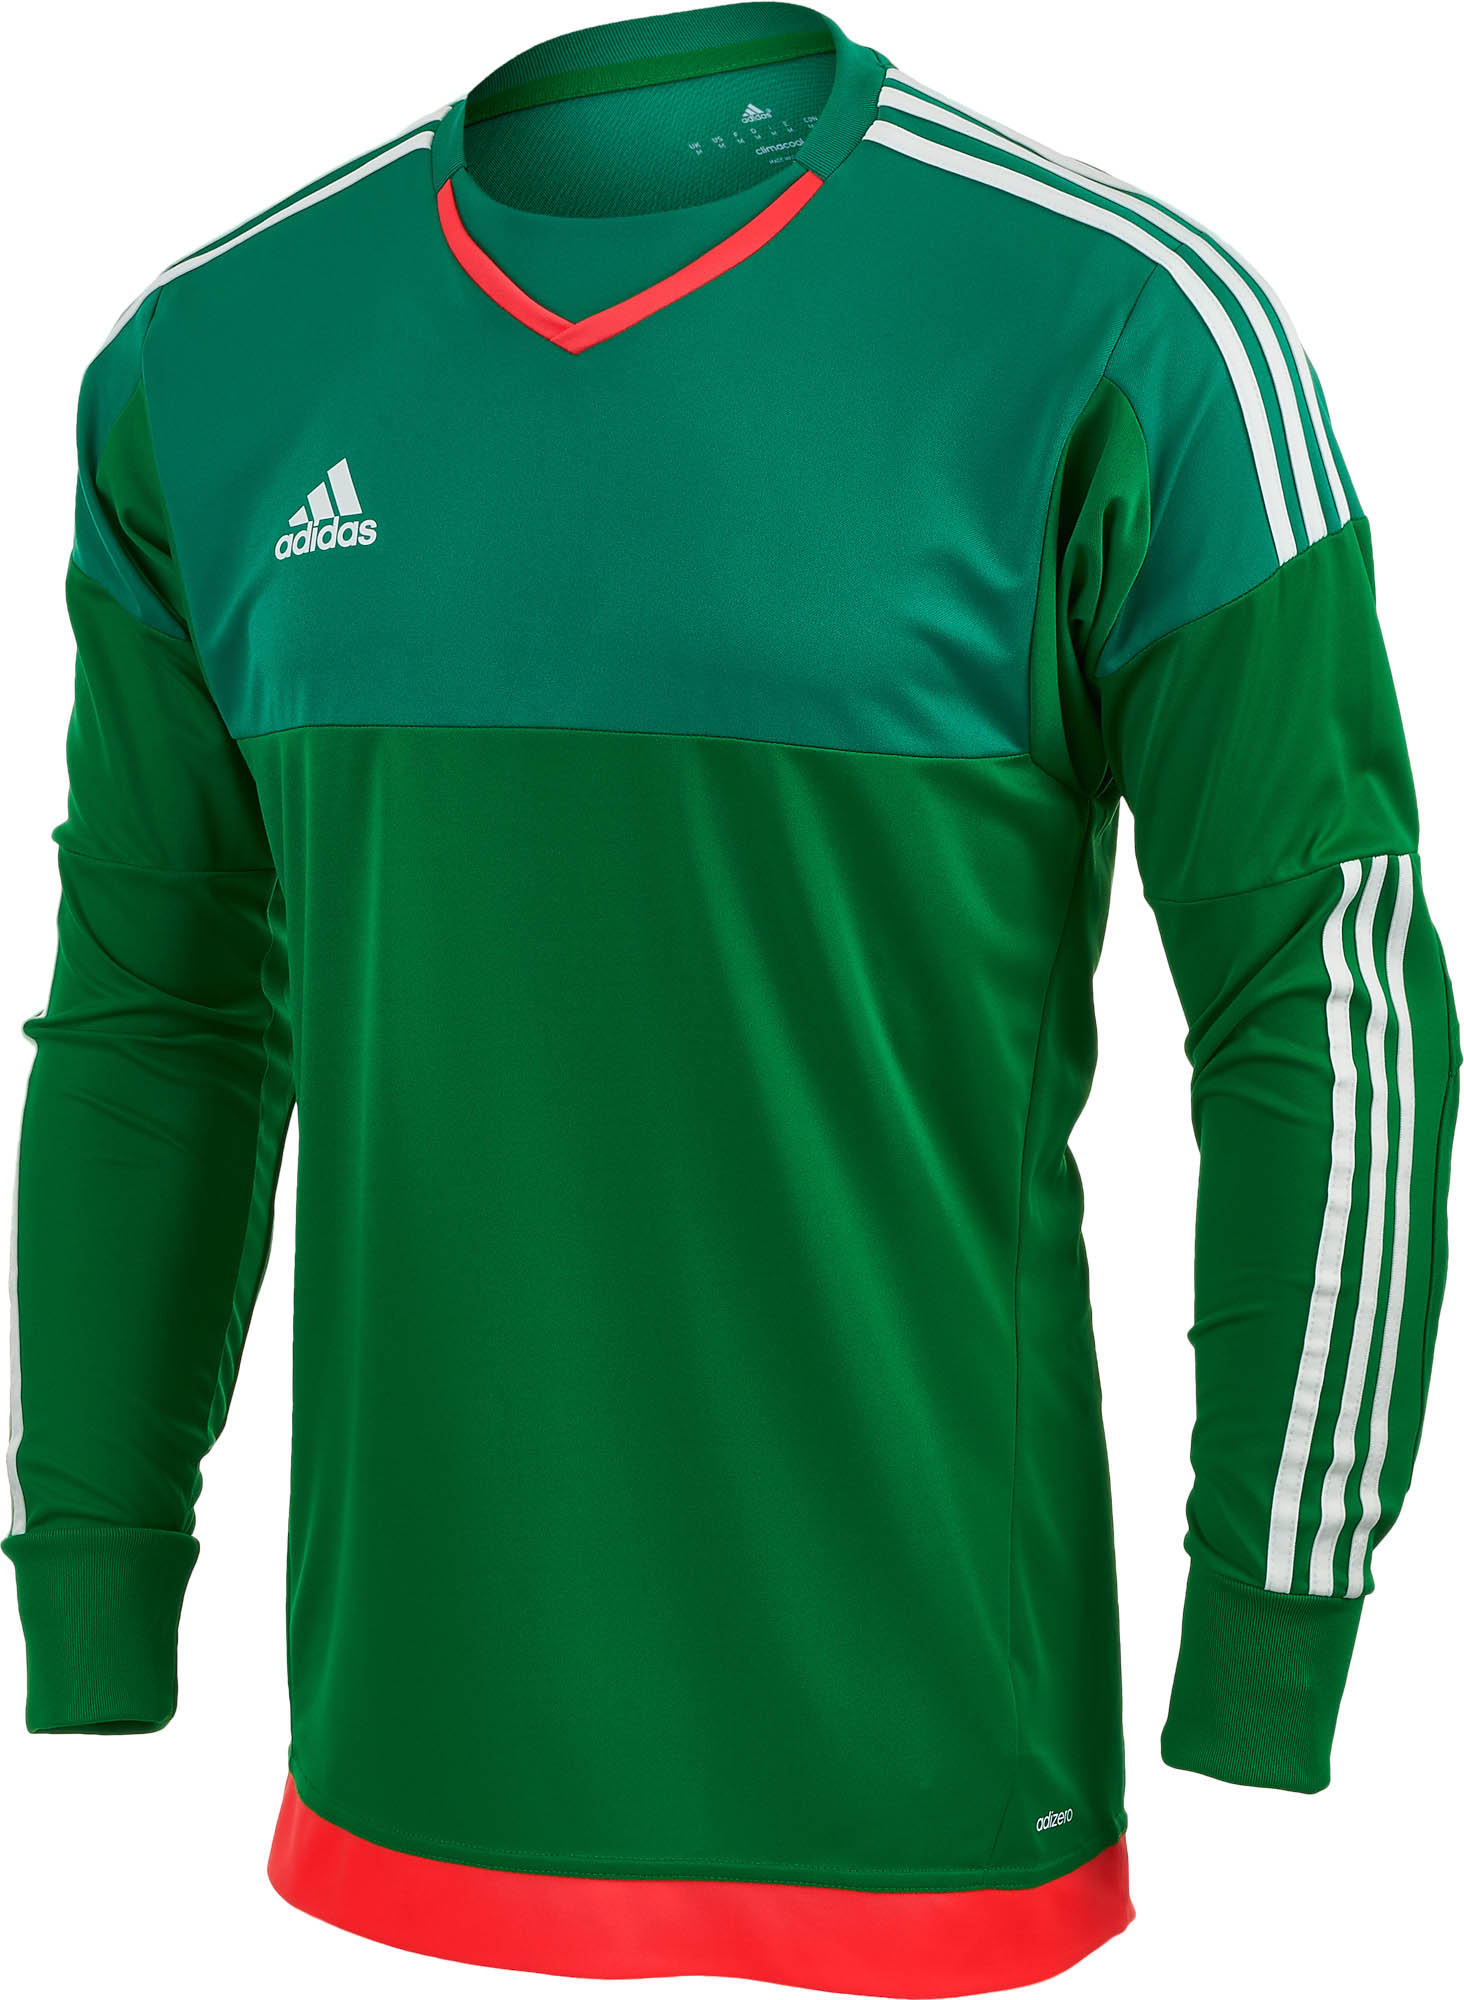 adidas goalkeeper uniform